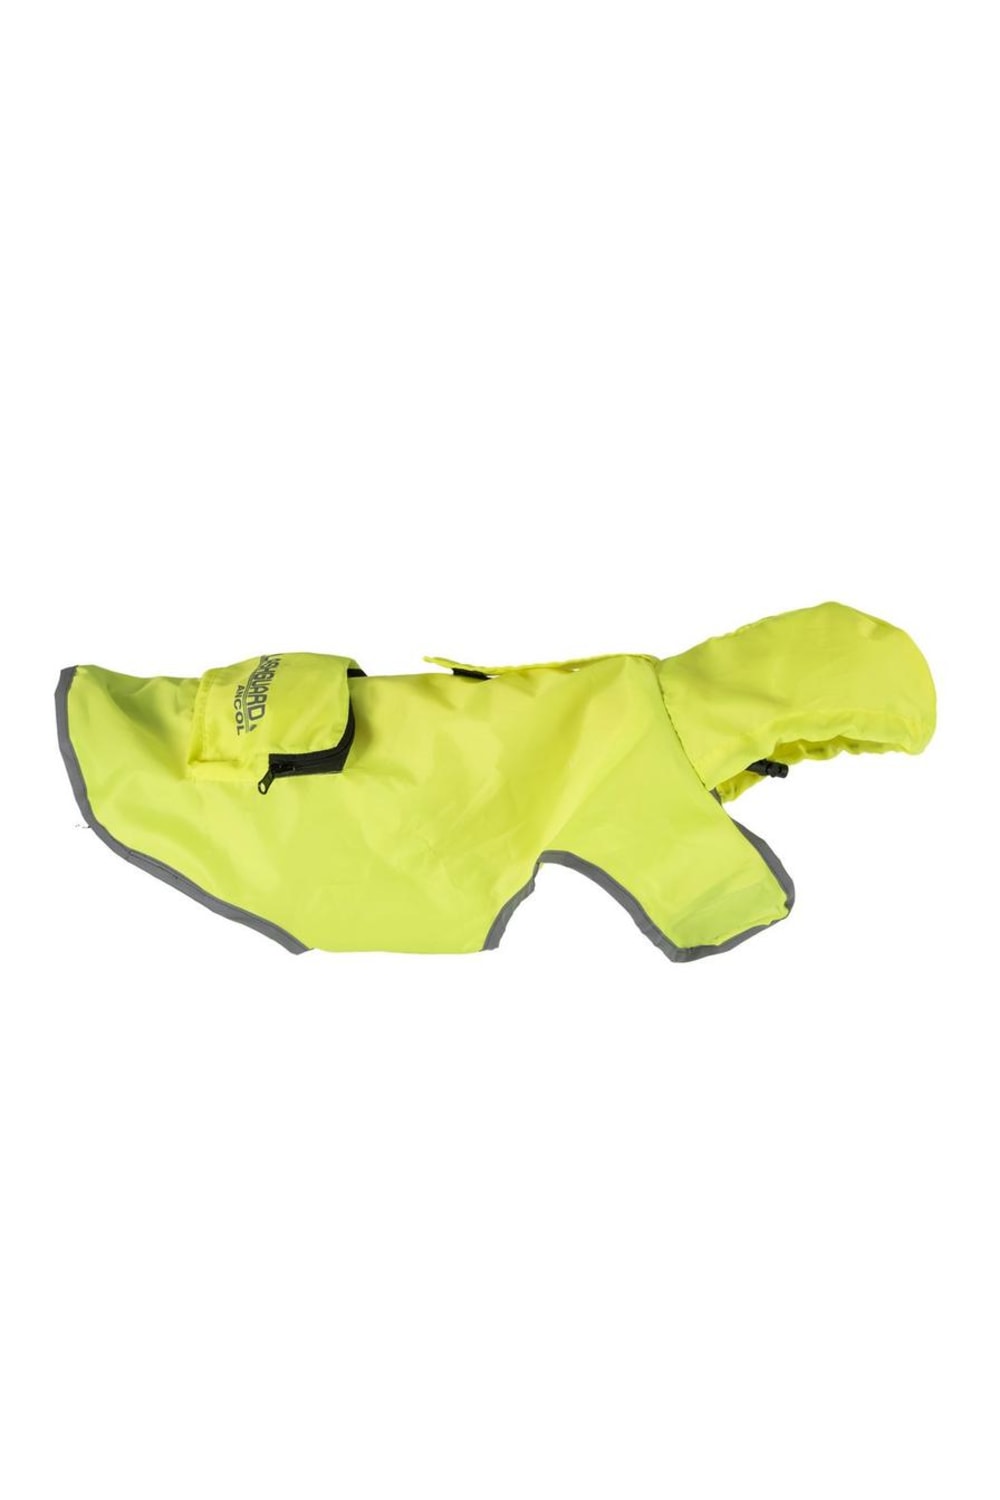 Ancol Muddy Paws Splashguard Hi-Vis Dog Raincoat (Yellow) (M)